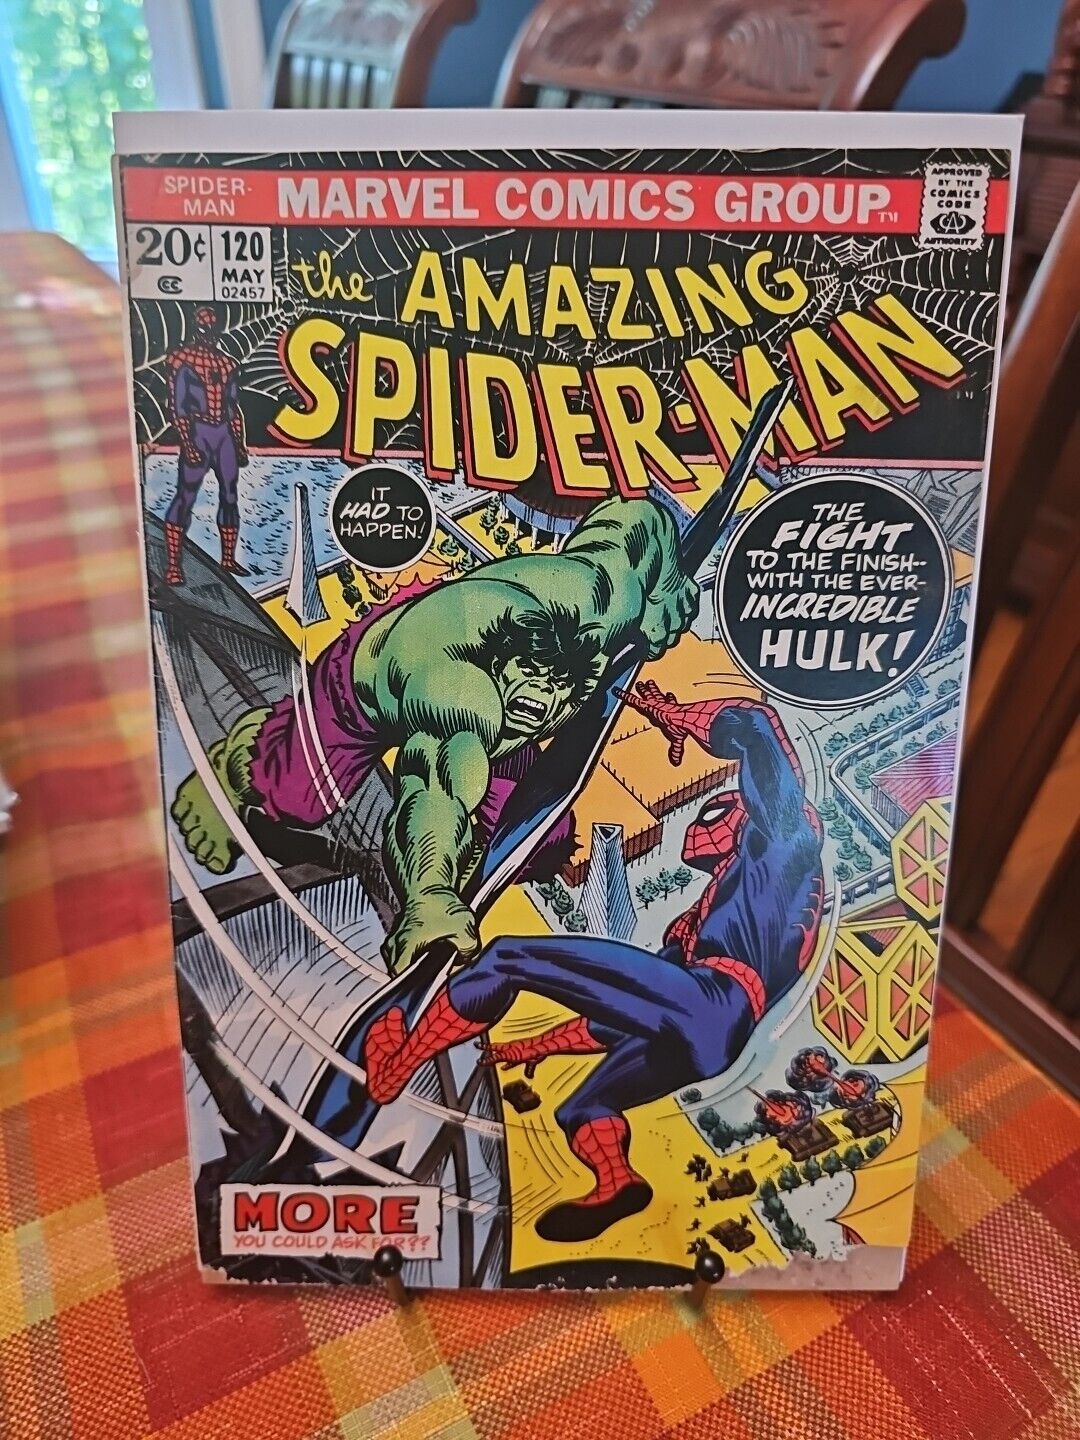 Amazing Spider-man #120, VG-, Spider-Man vs. The Hulk